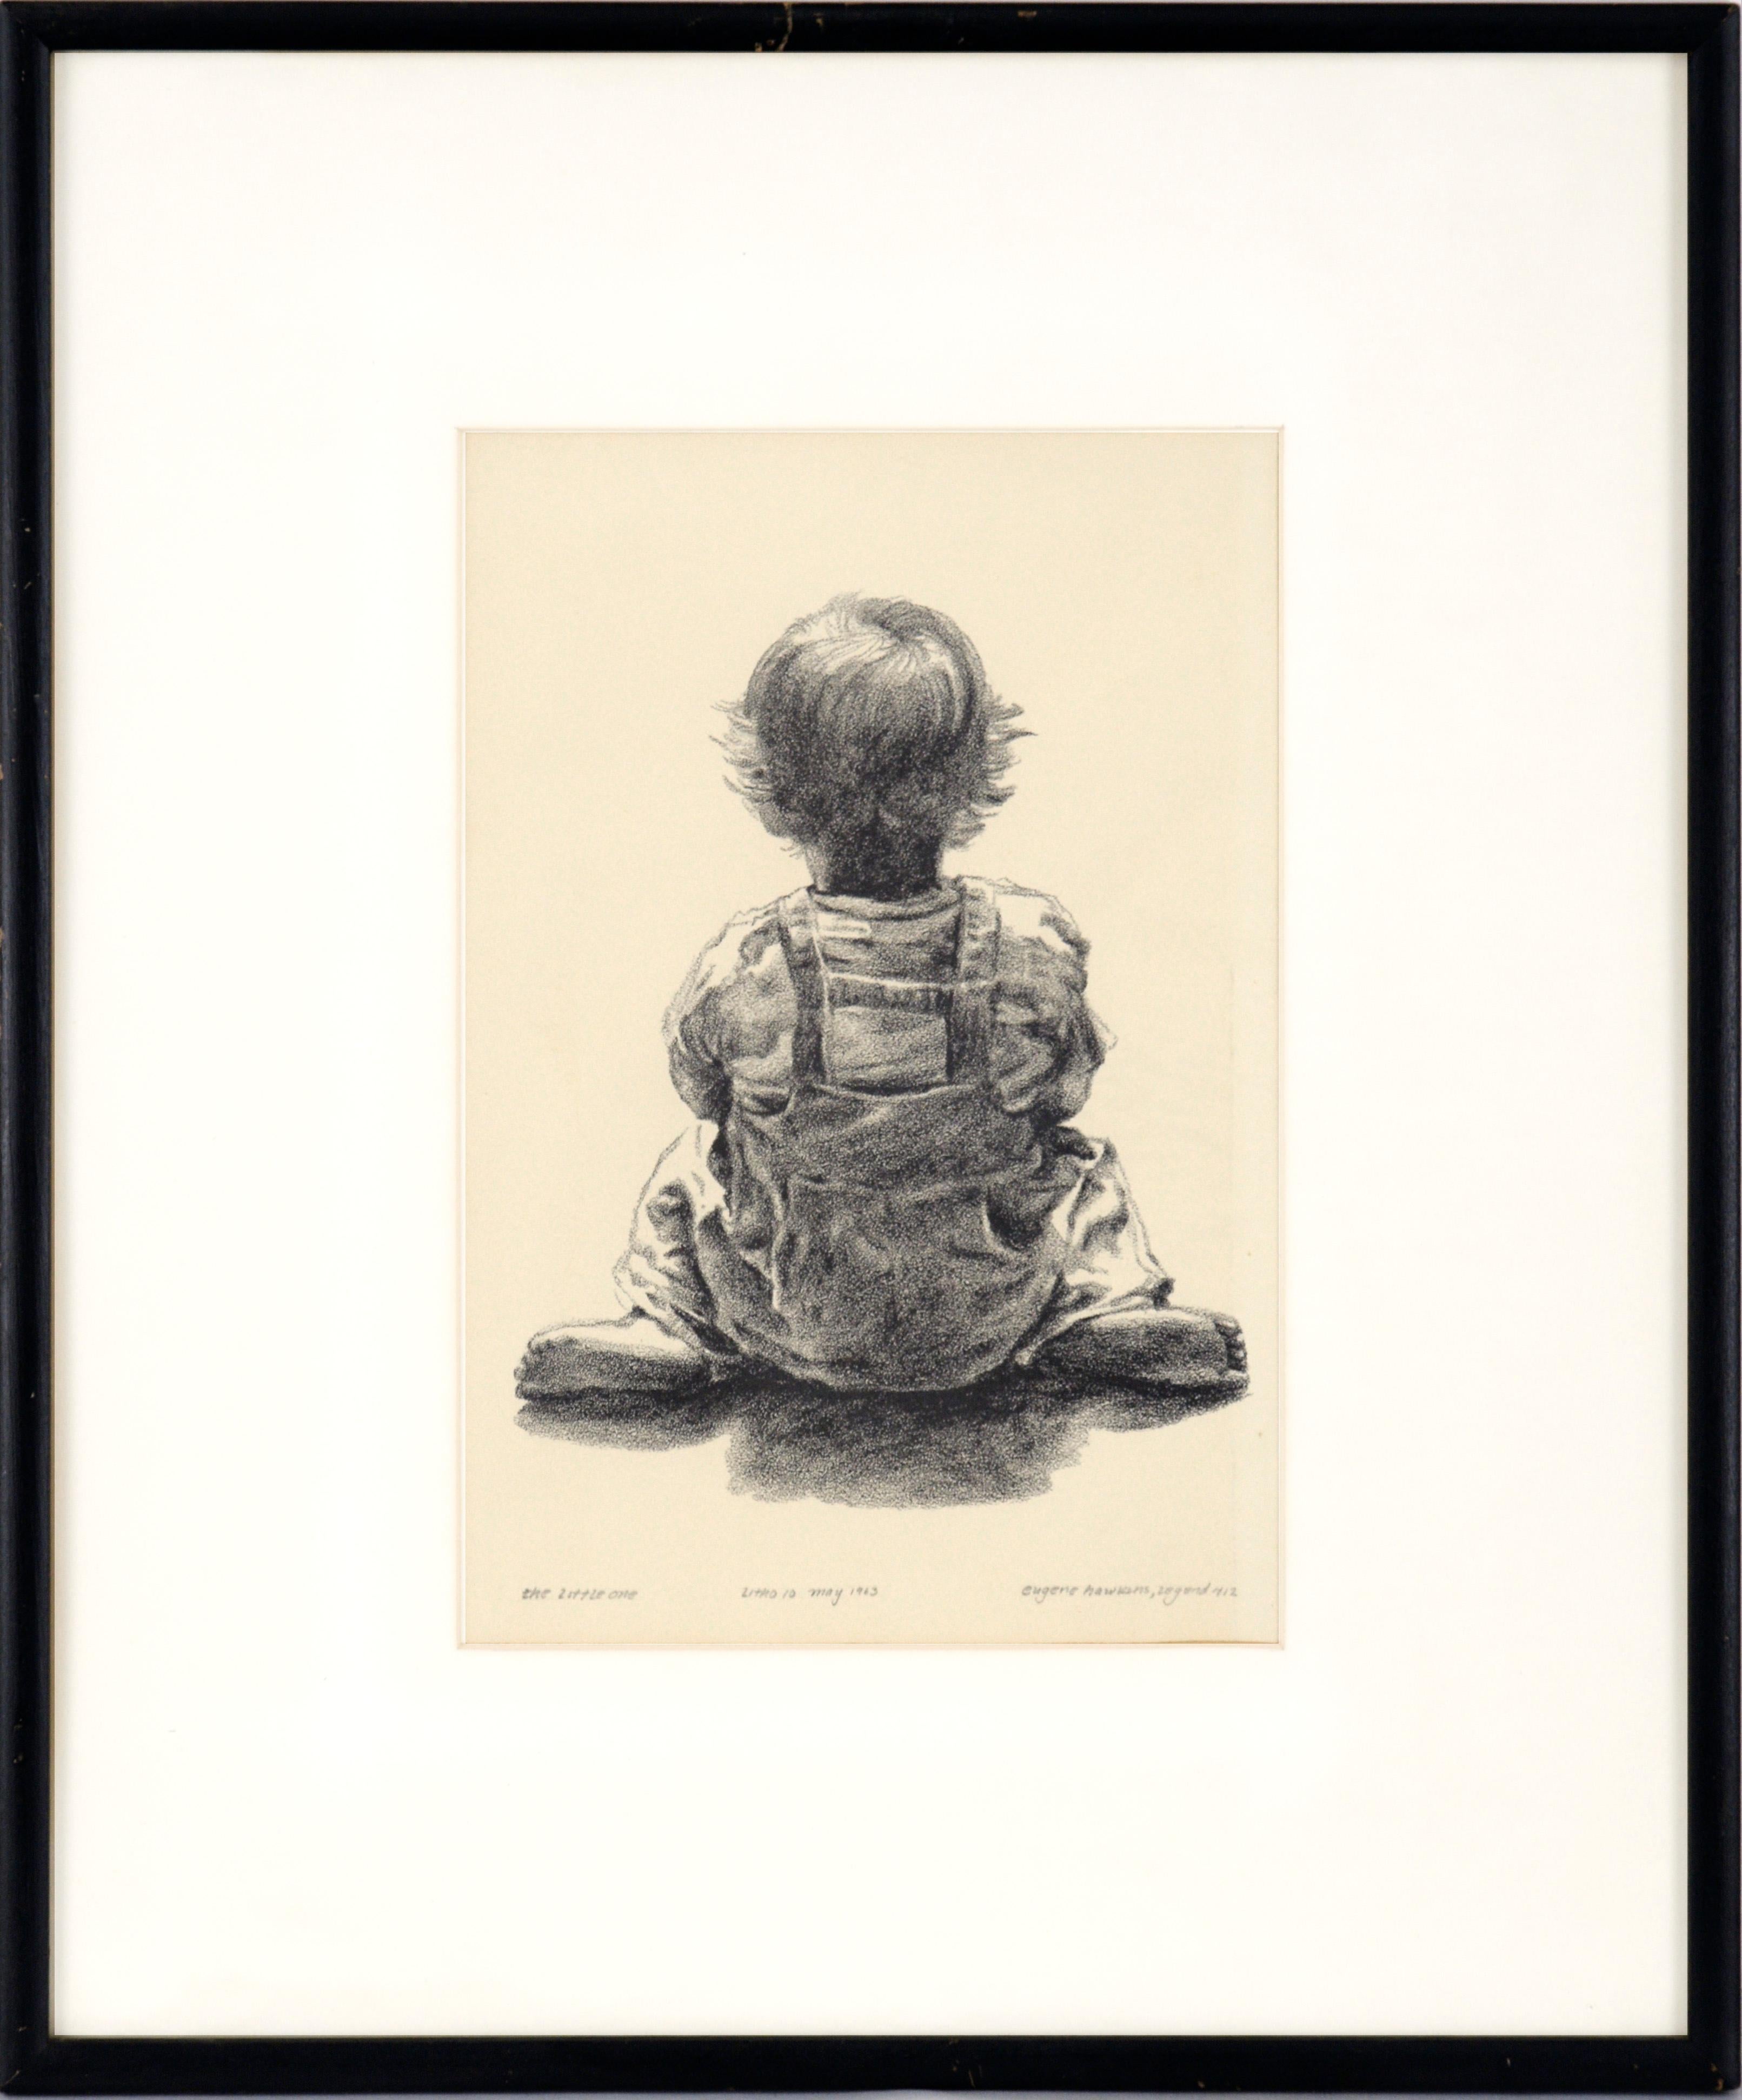 Eugene Hawkins Figurative Print – „The Little One“ – Seltene signierte figurative Lithographie in Tinte auf Papier